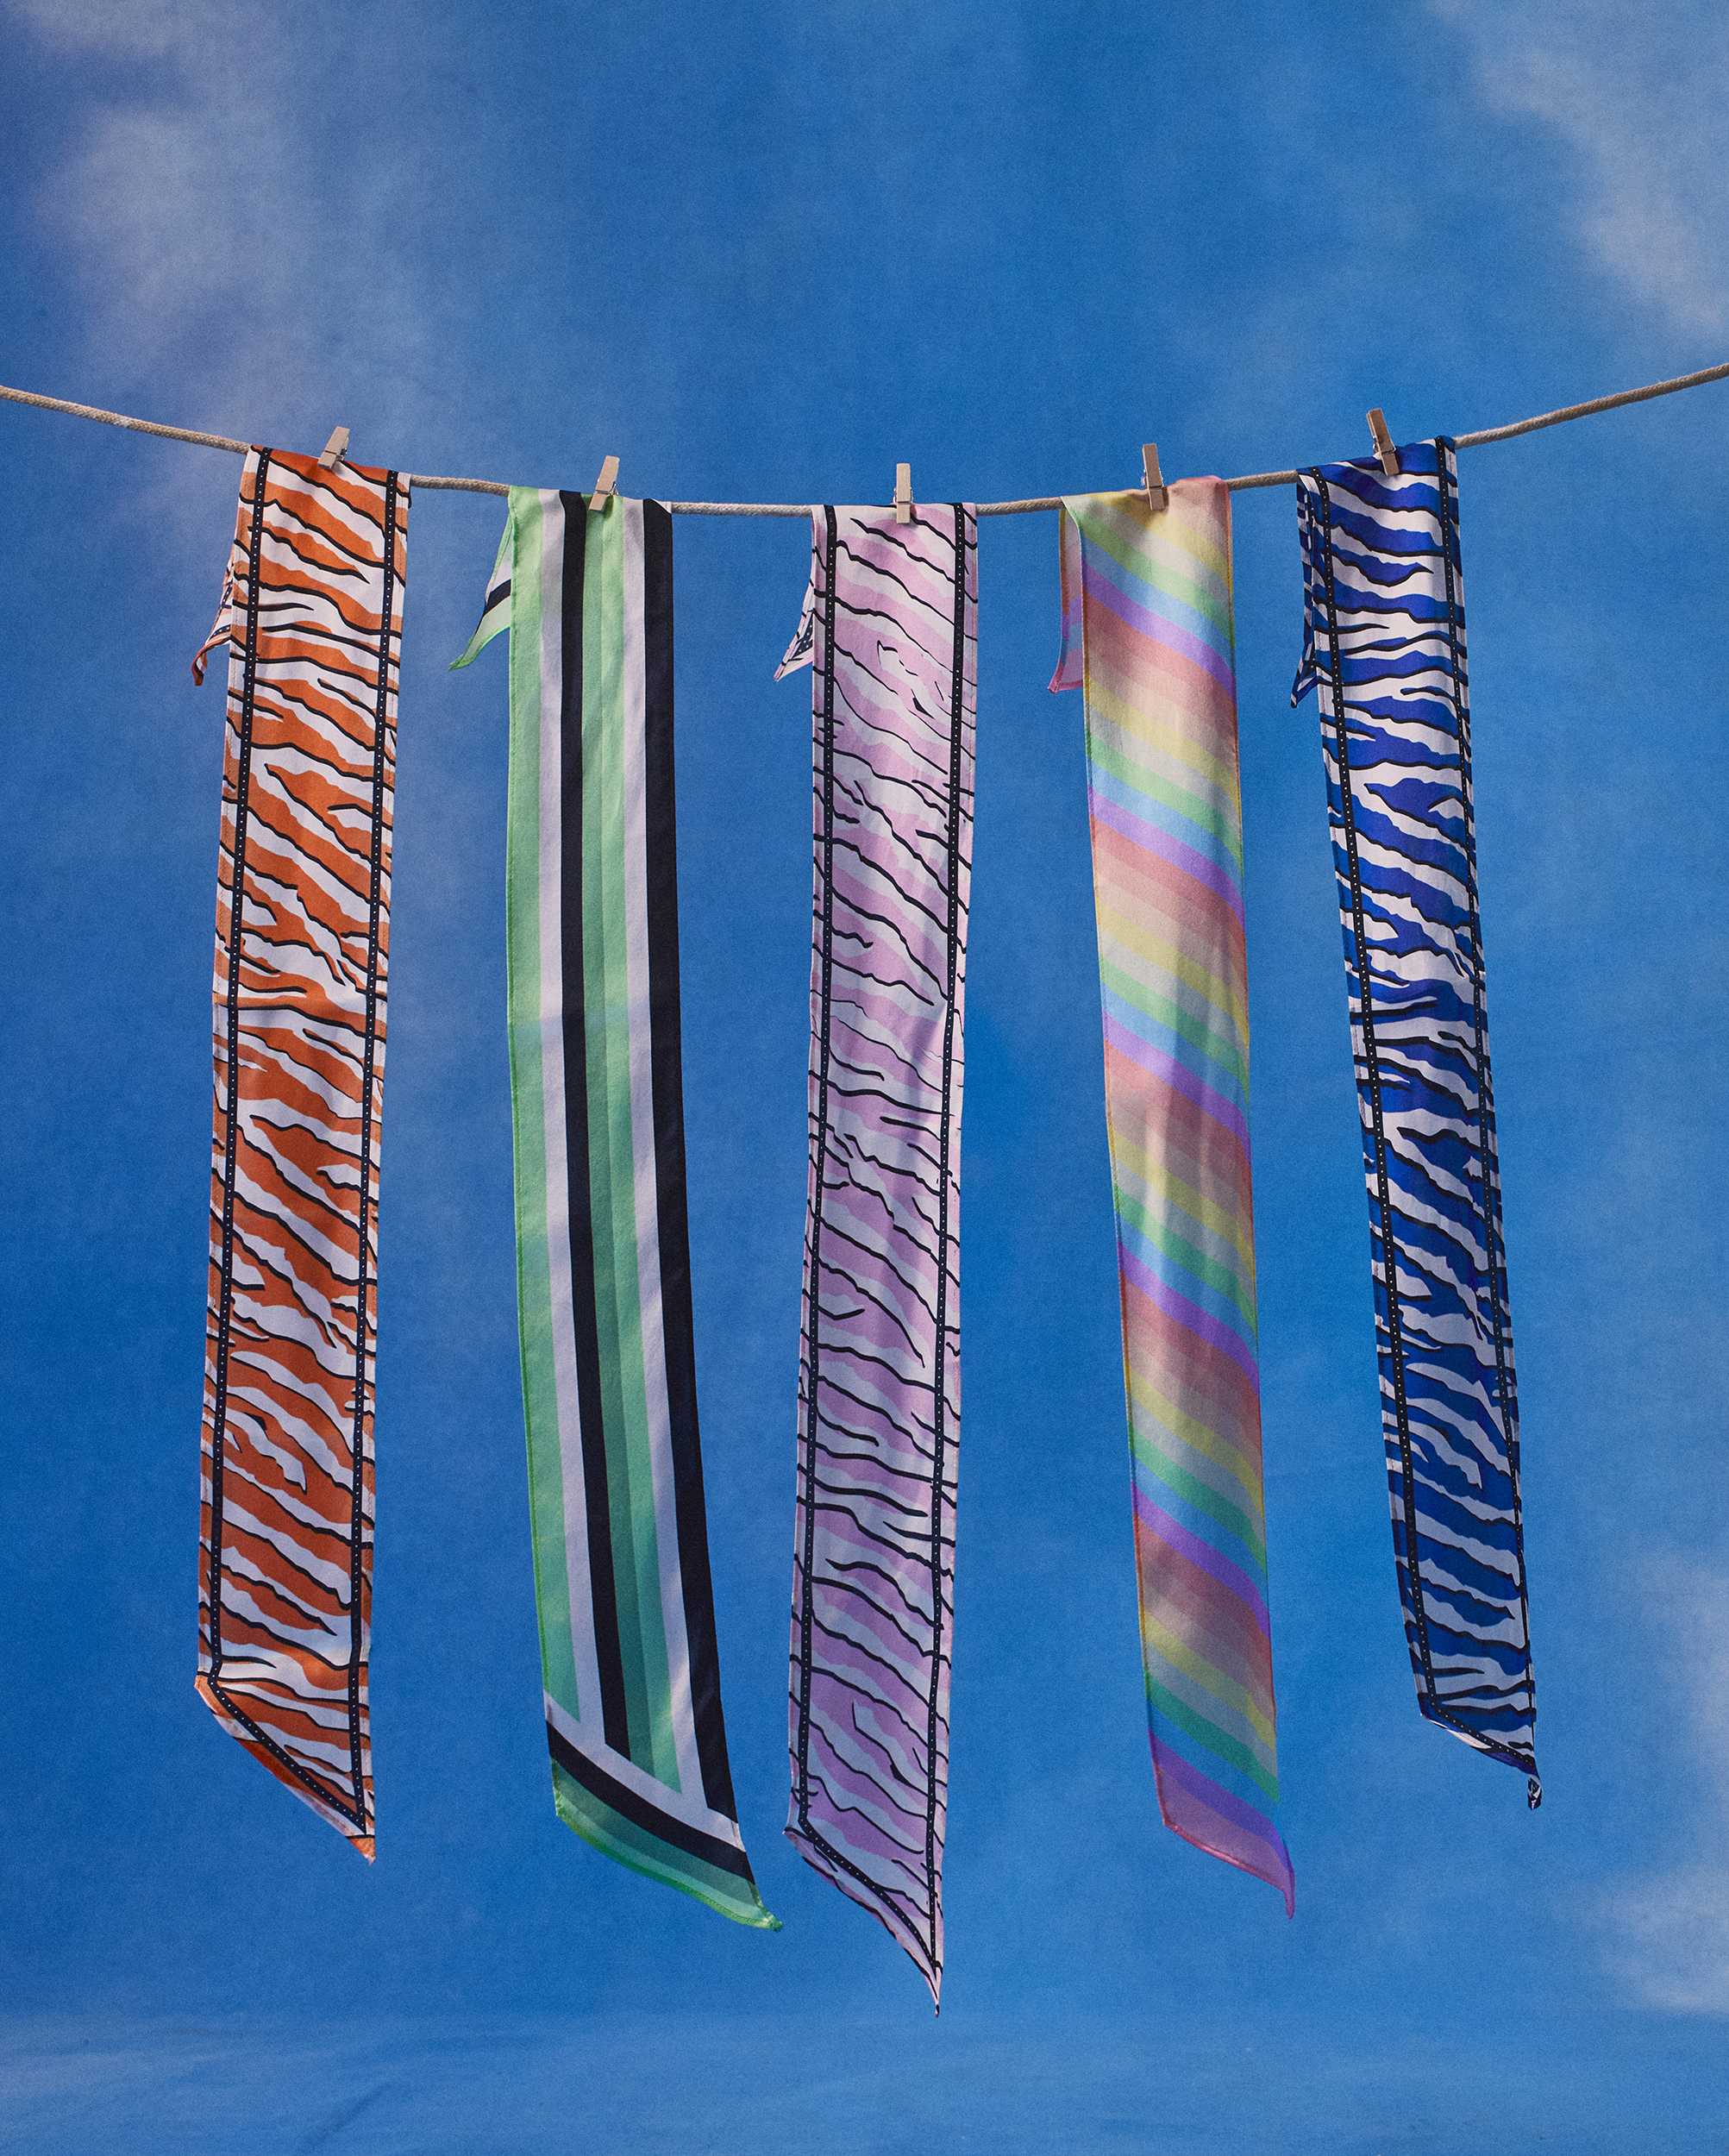 Silk scarfs hanging to dry